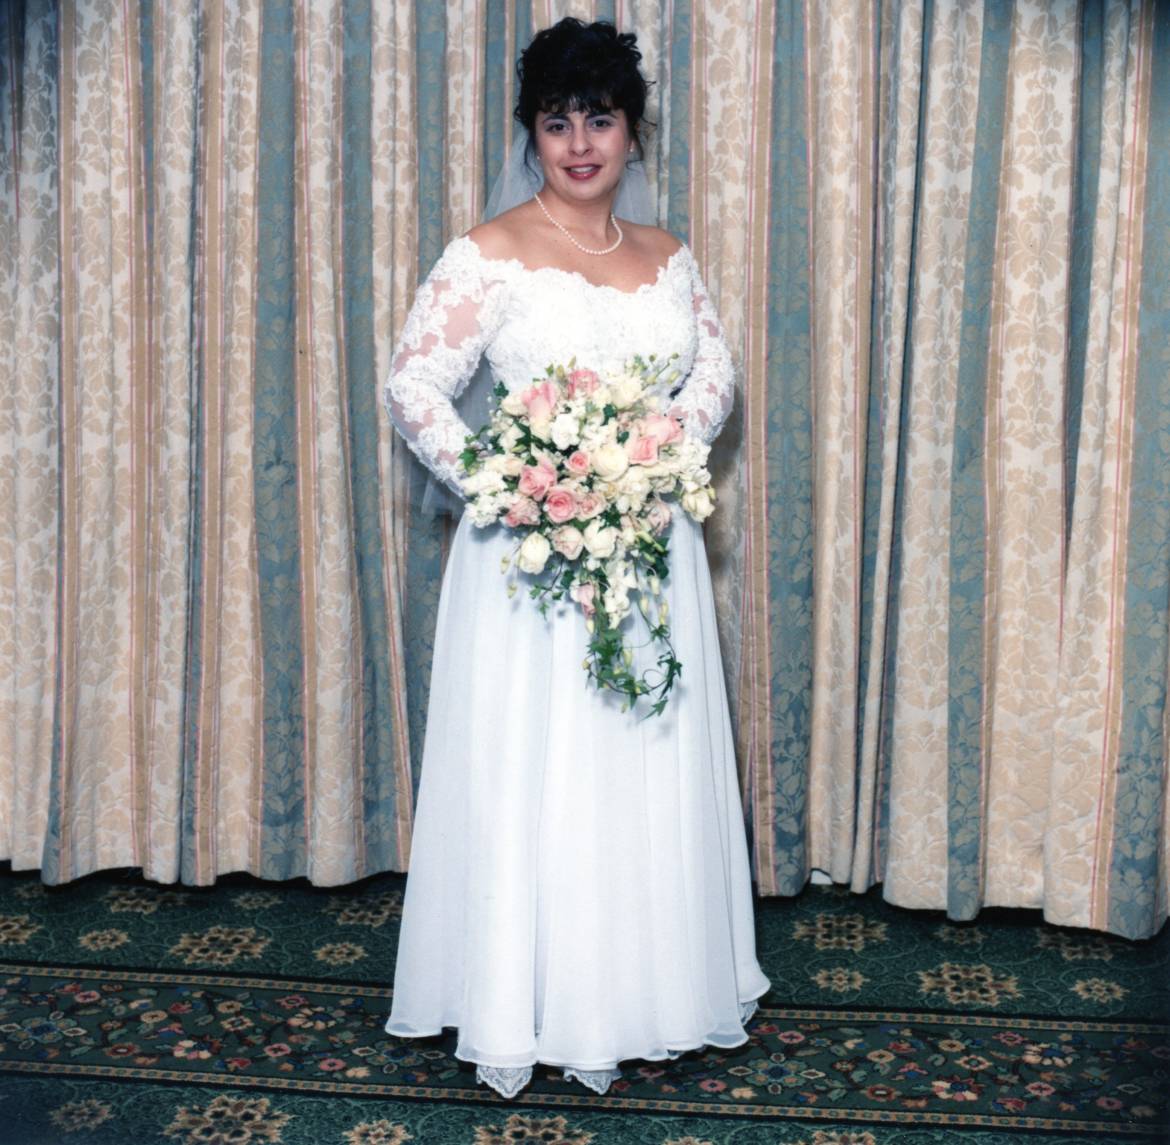 Bride-picture642.jpg